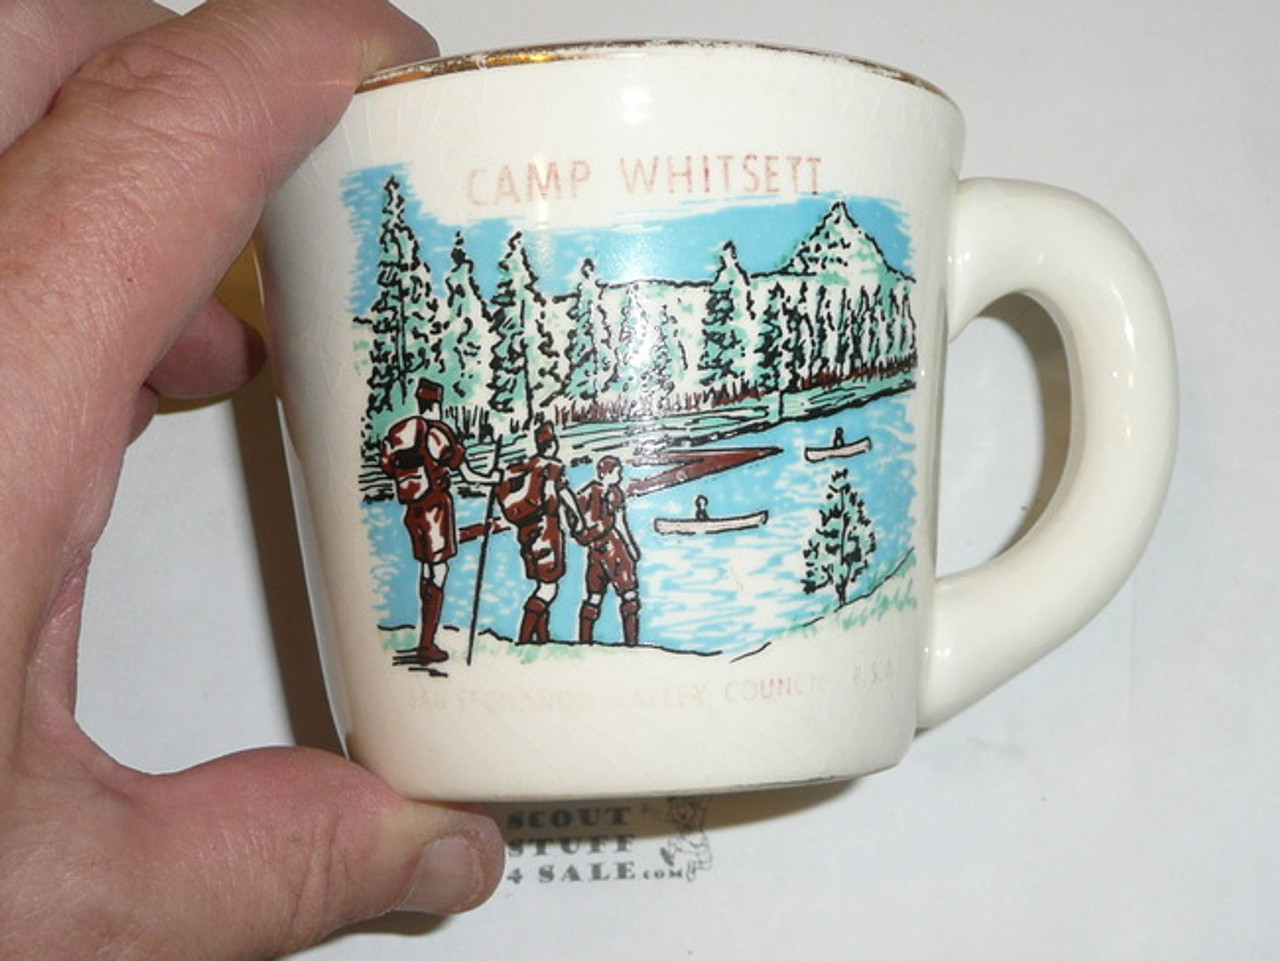 1970 Camp Whitsett Mug, Lake Scene, Fade to Camp and Council Name